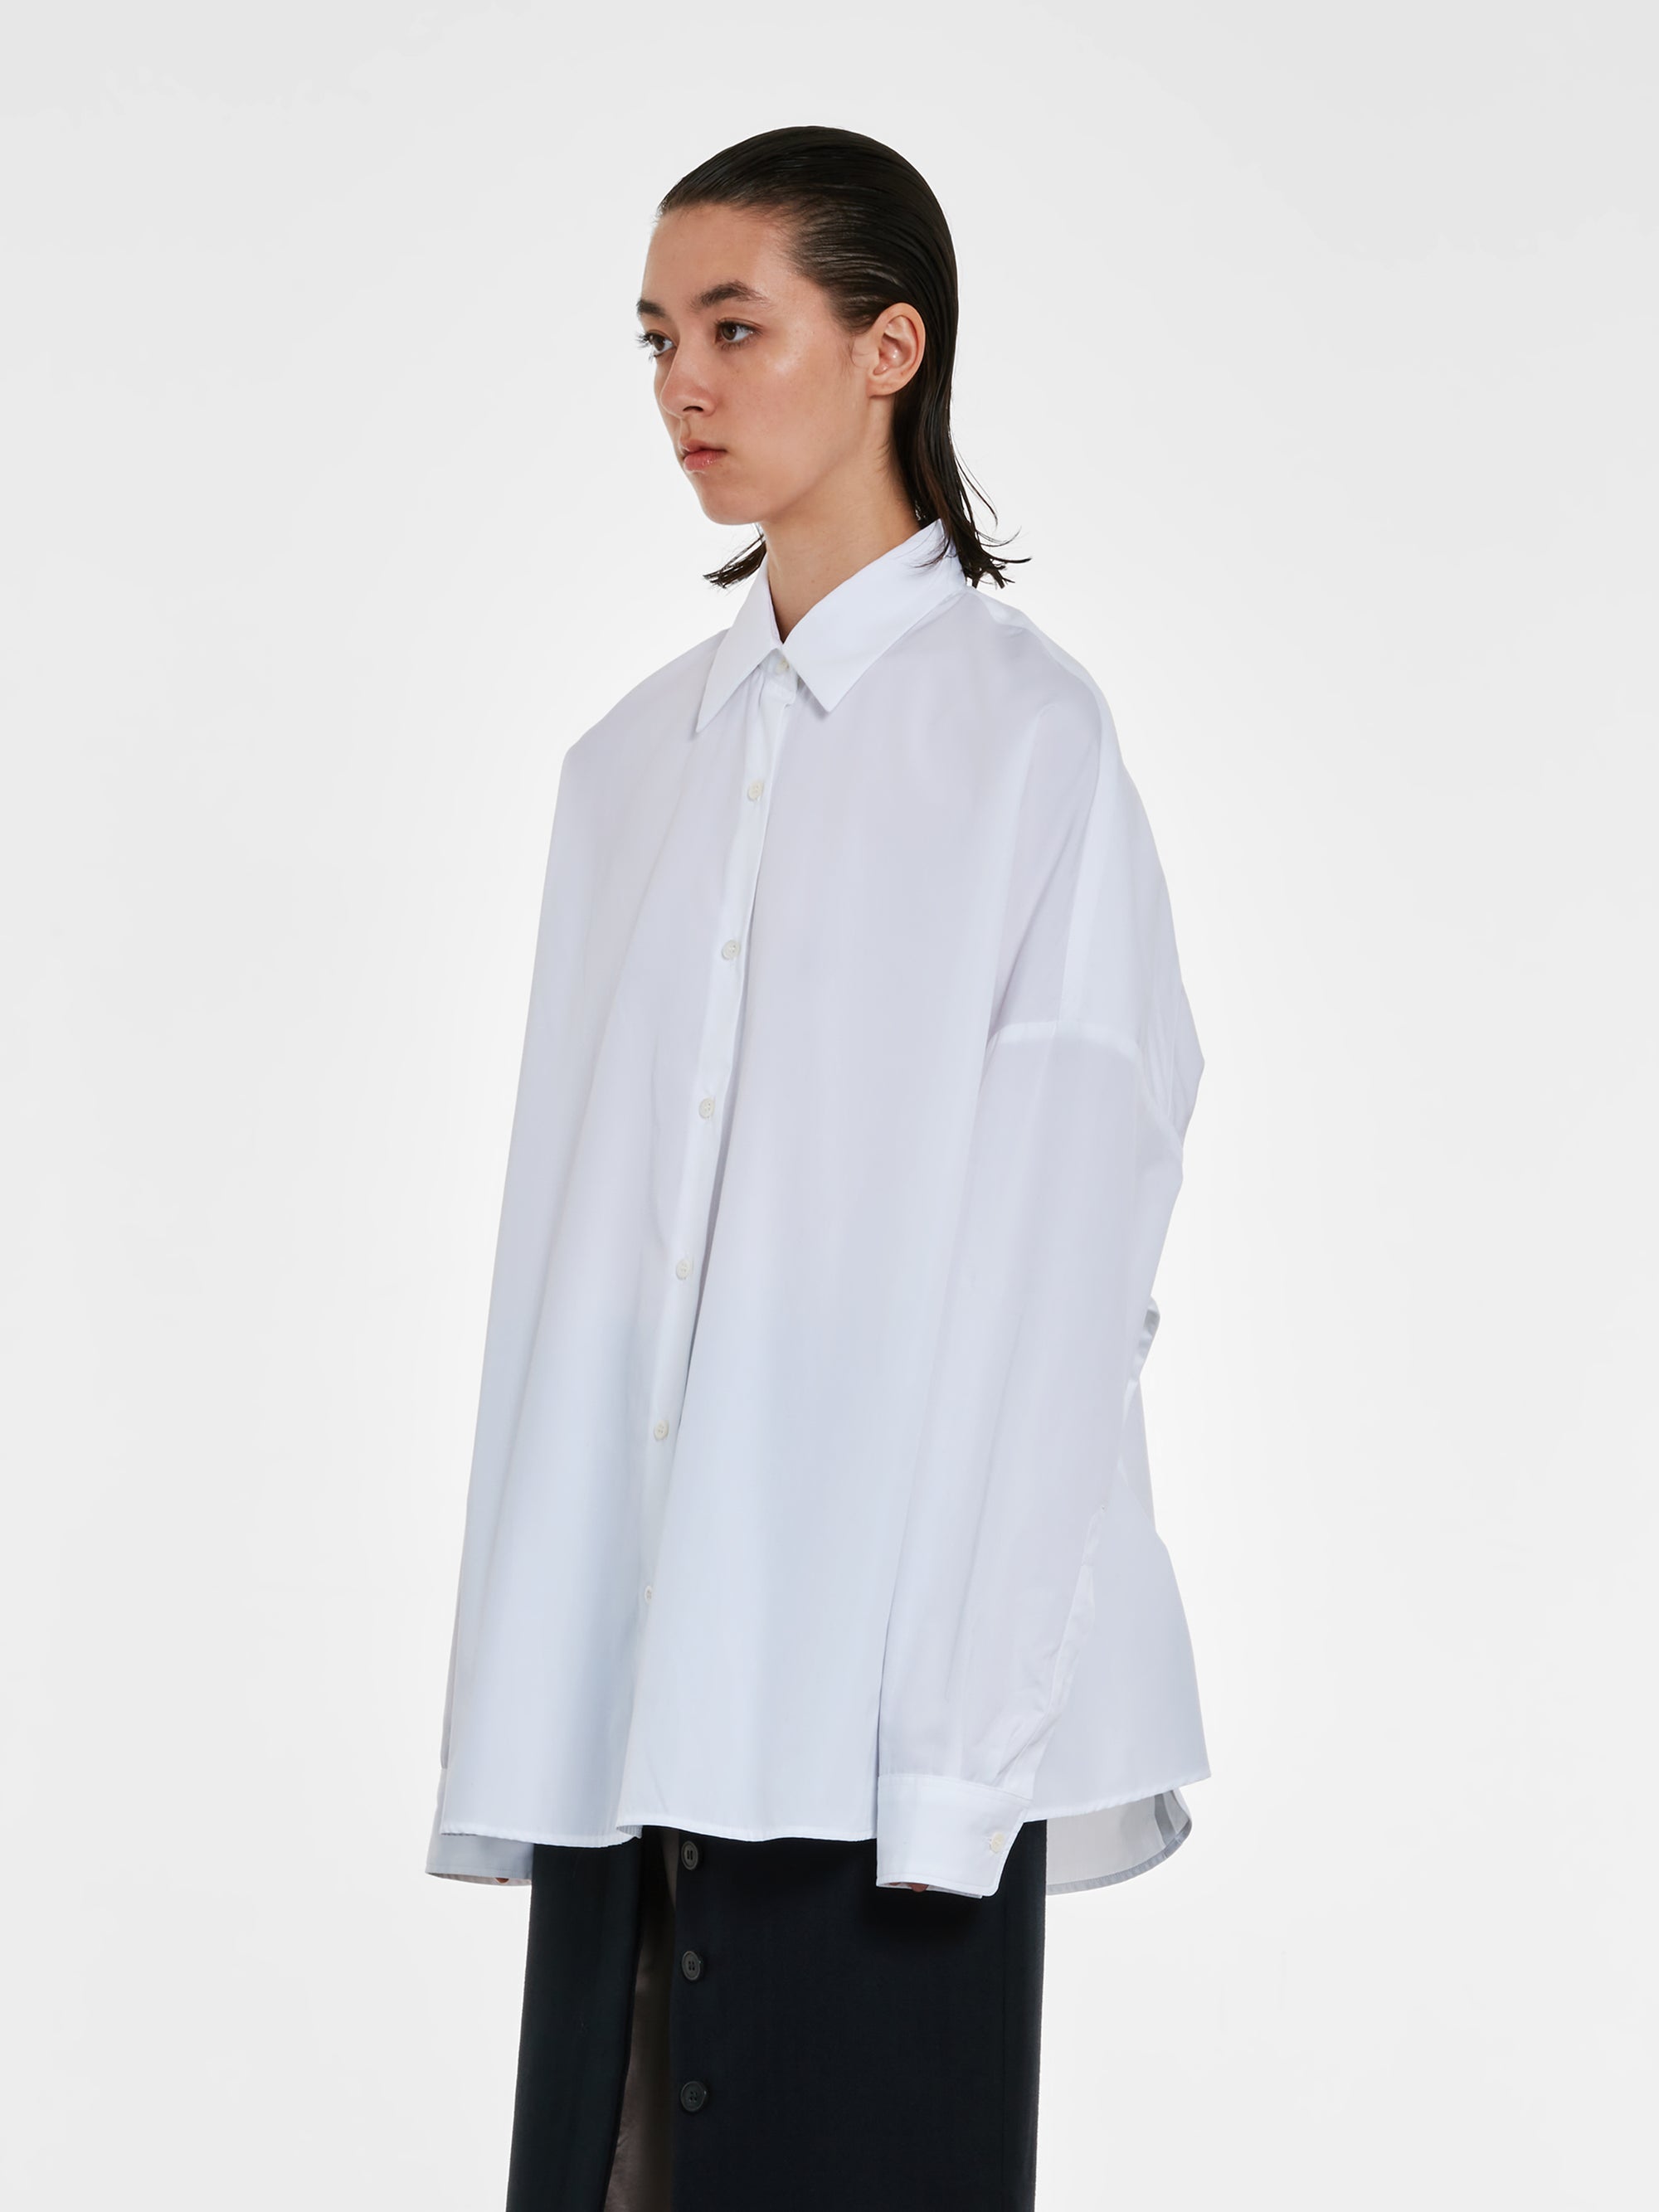 Dries Van Noten - Women’s Cotton Cocoon Shirt - (White) view 2